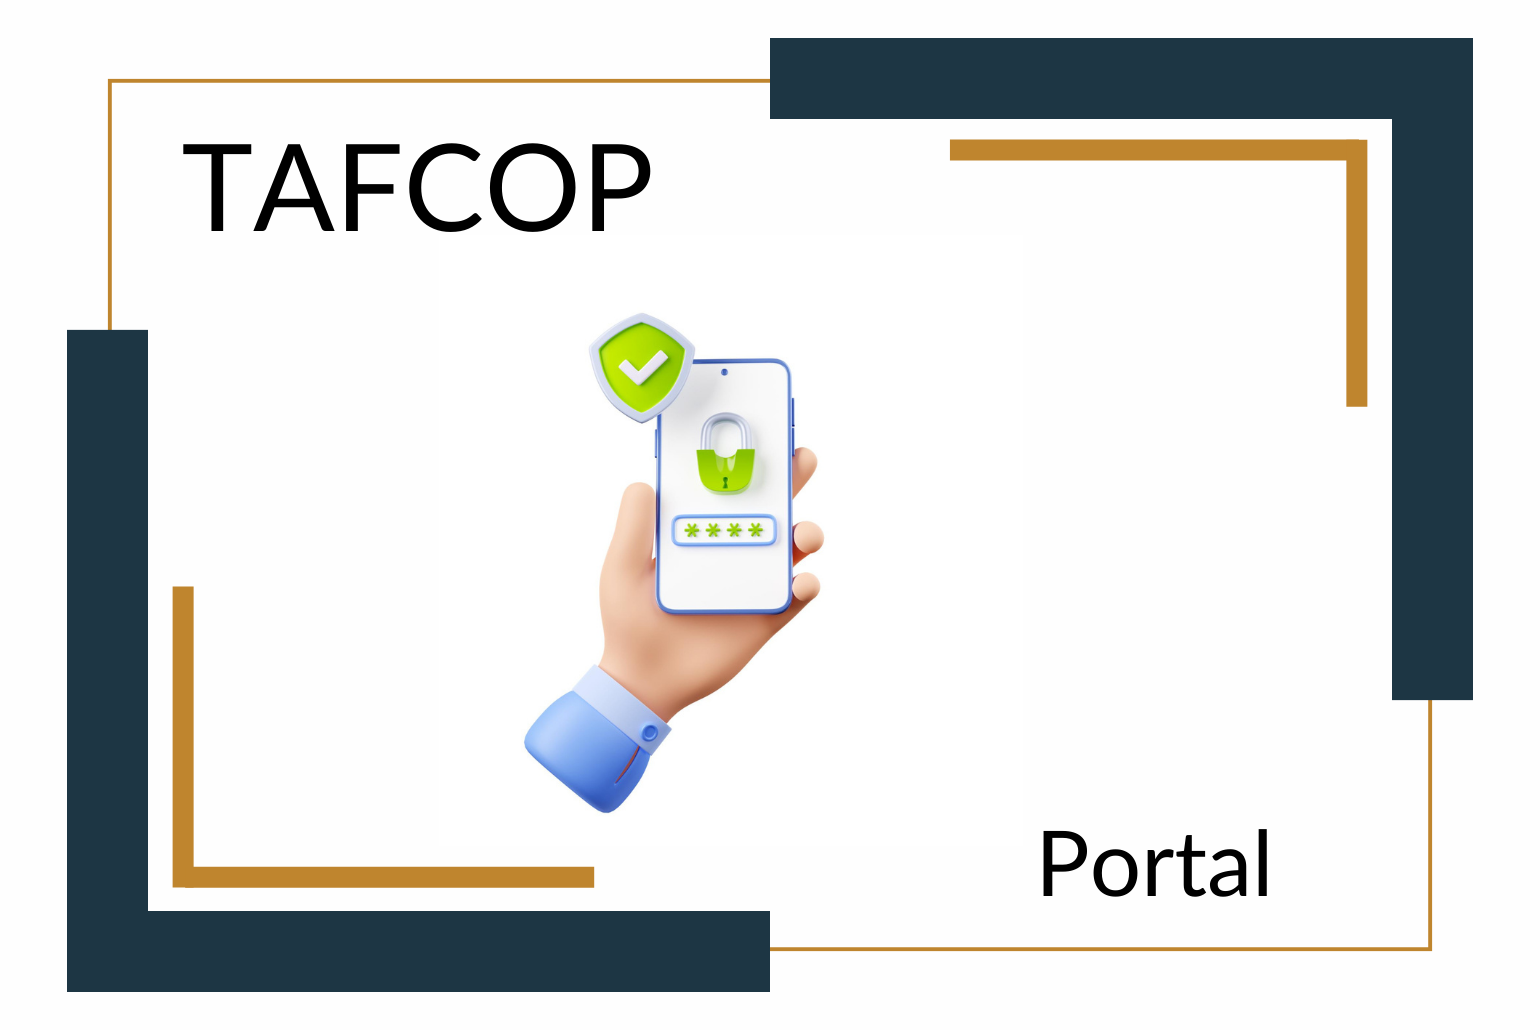 Tafcop Portal